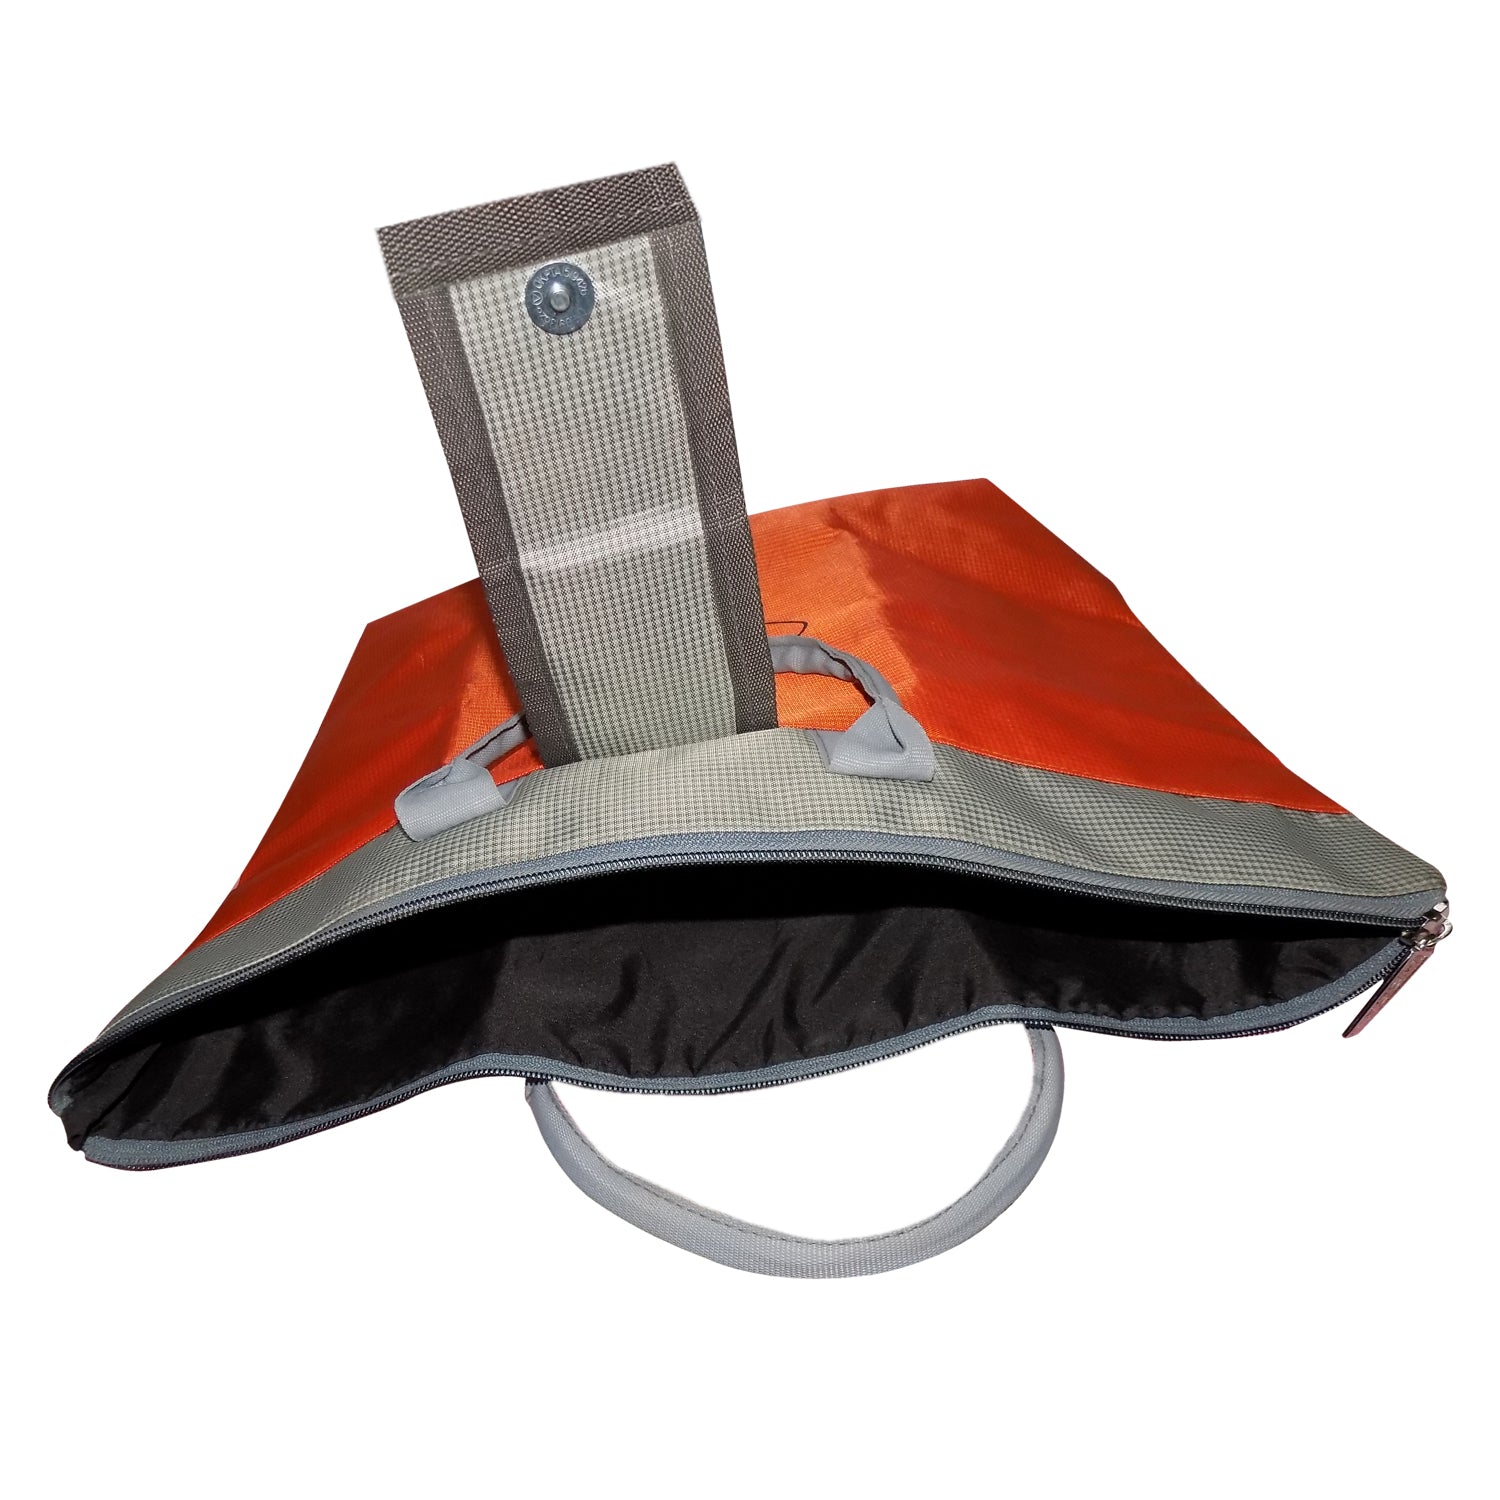 Multipurpose Lightweight 2 in 1 Foldable Travel Bag